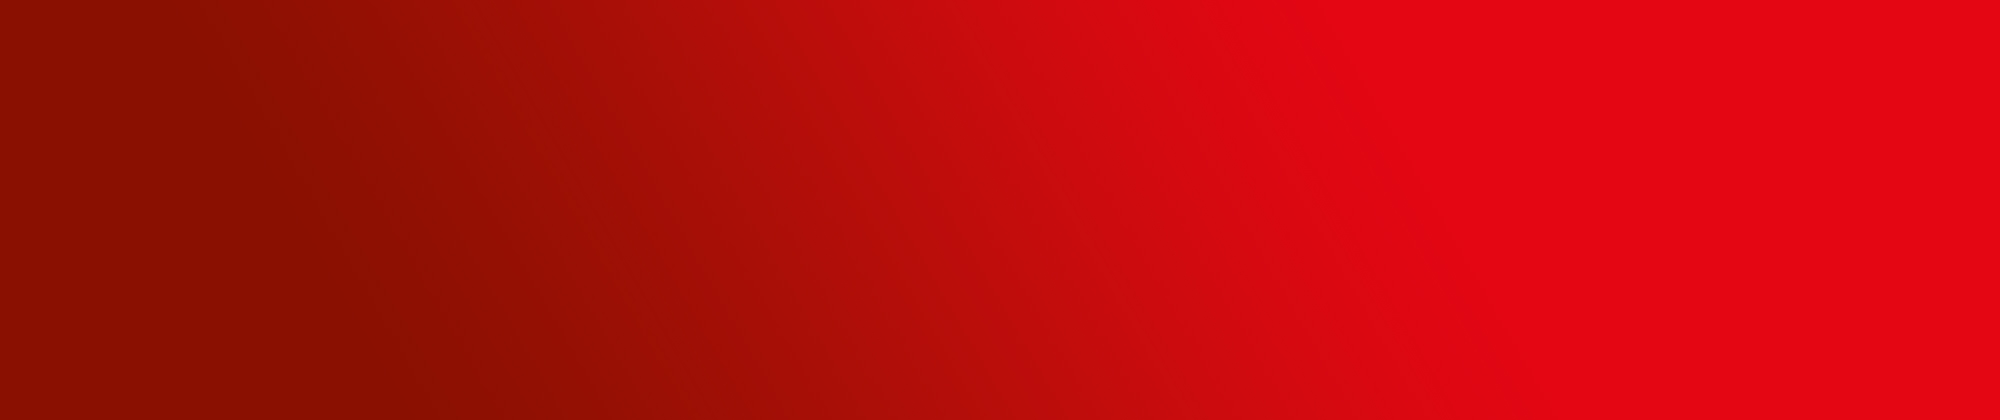 Website banner rood vlak